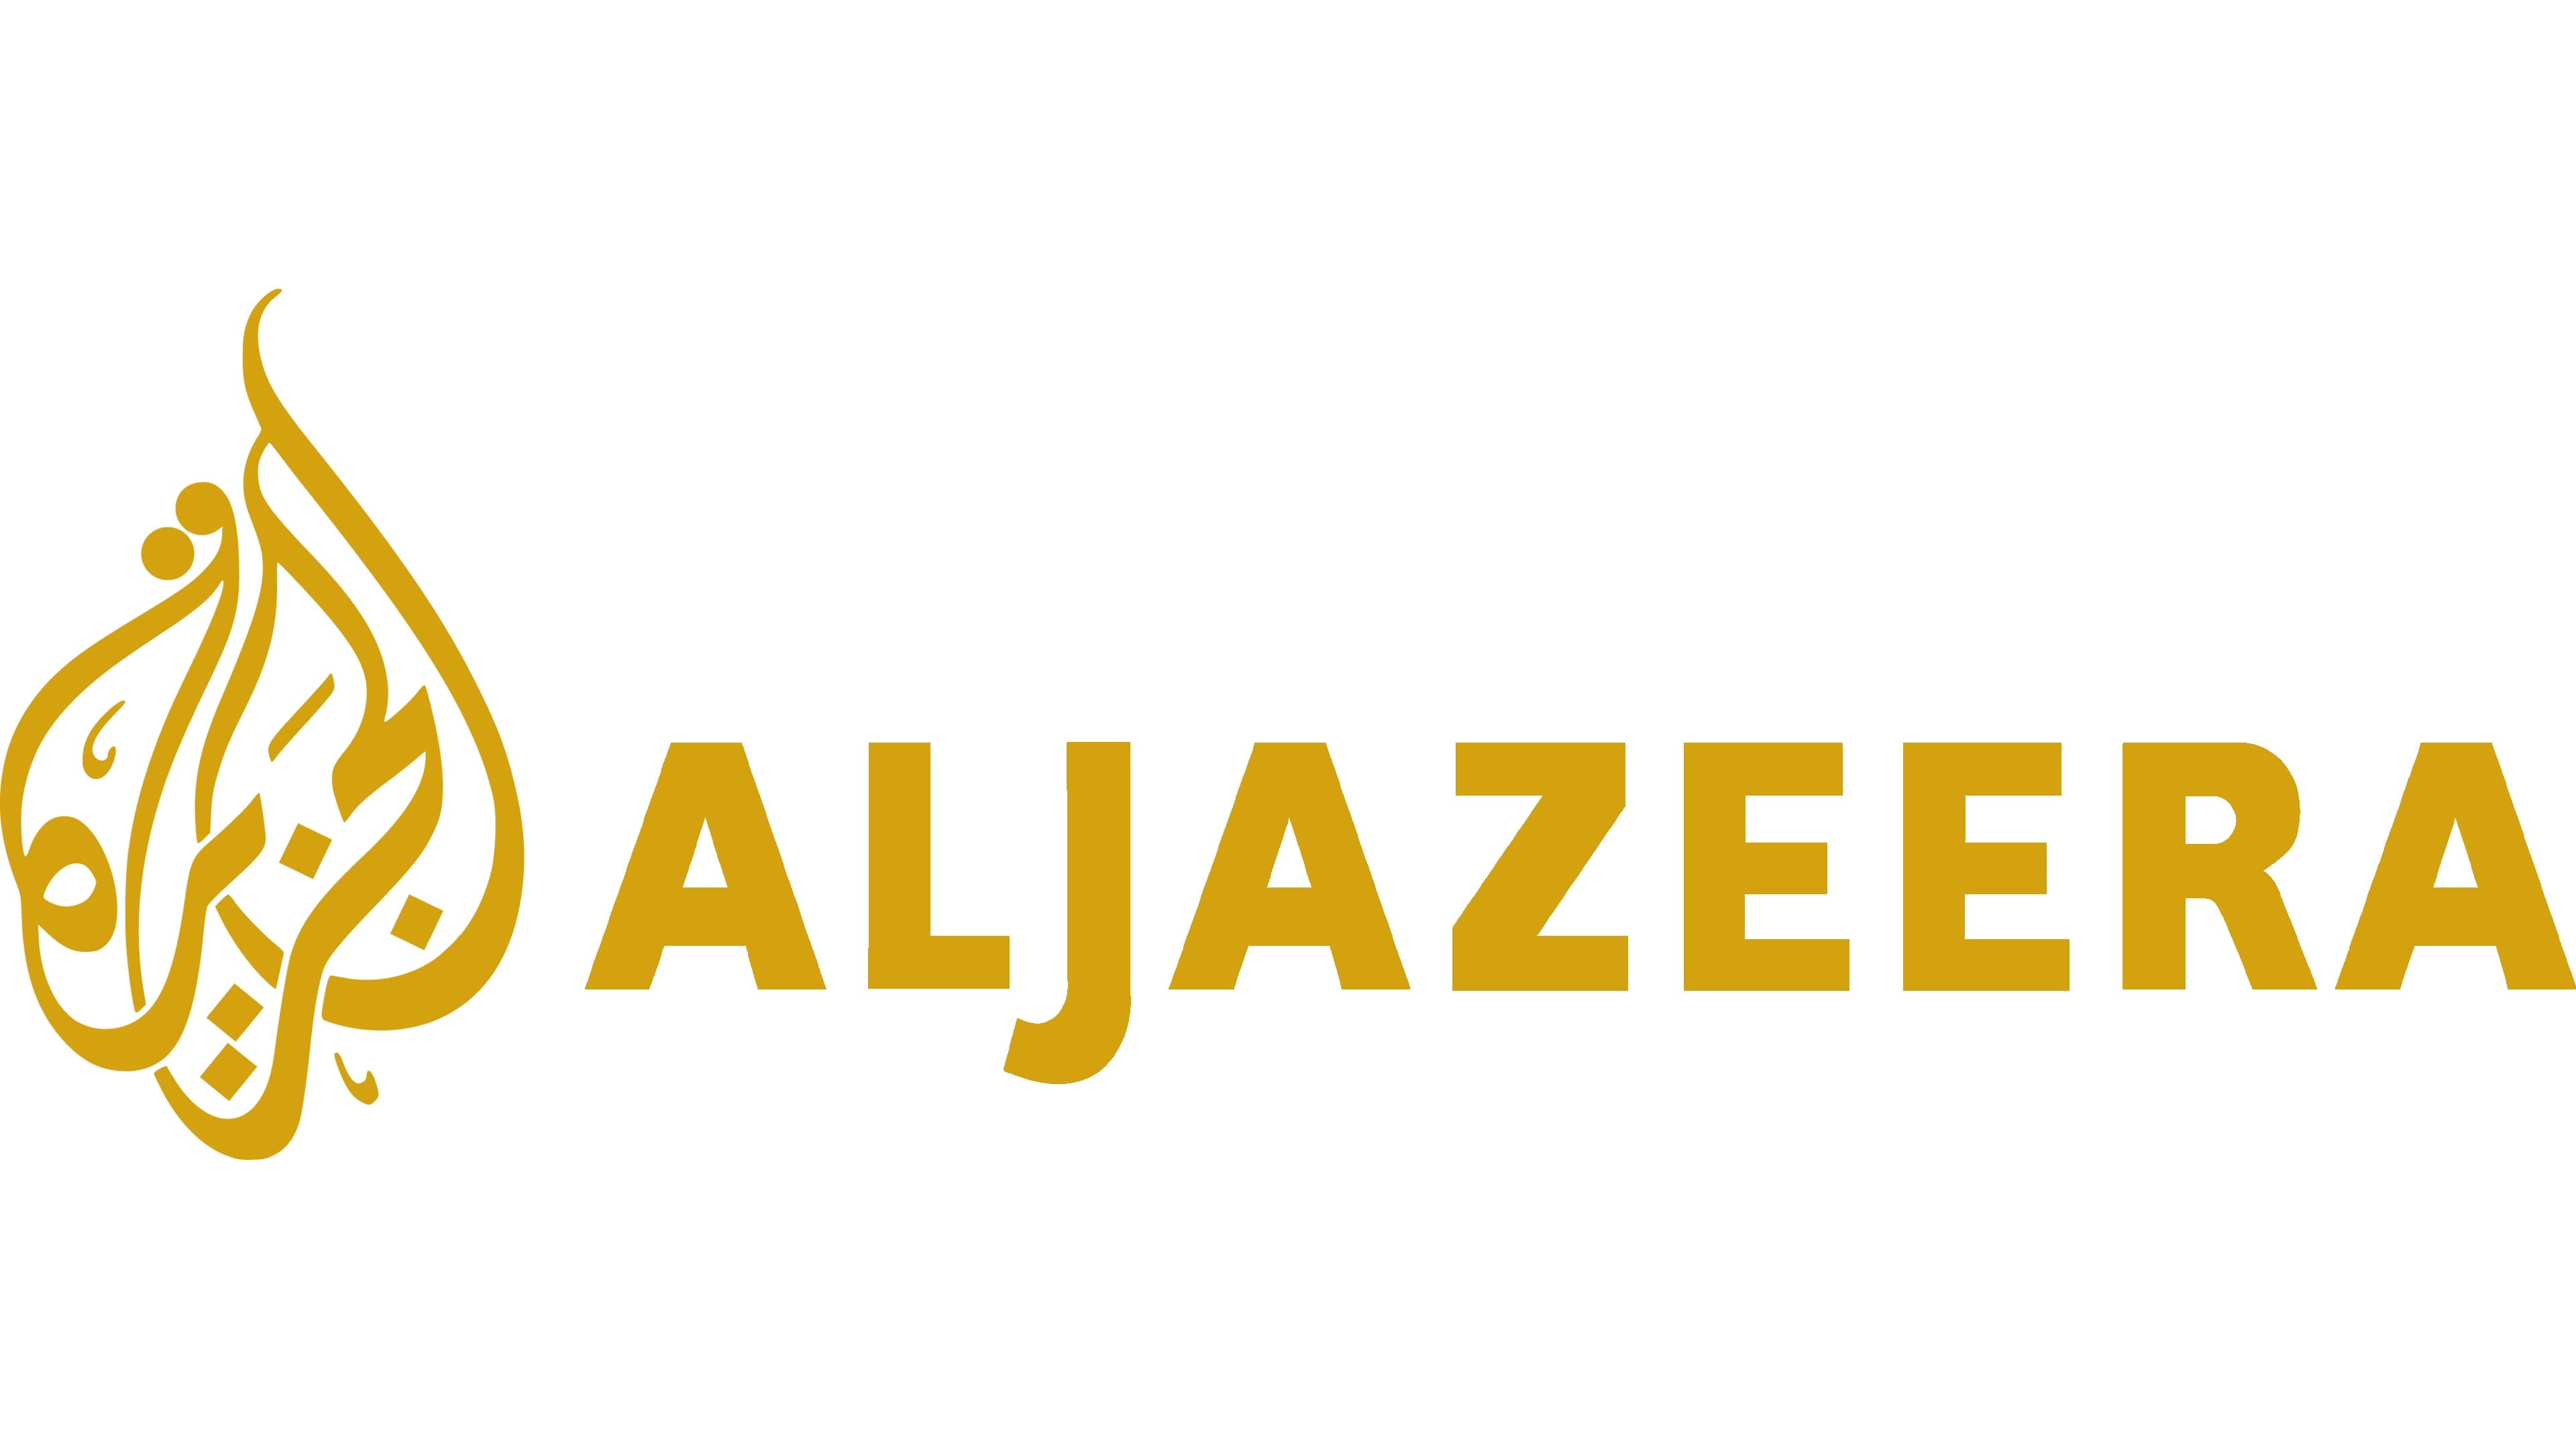 Al Jazeera logo and symbol, meaning, history, PNG